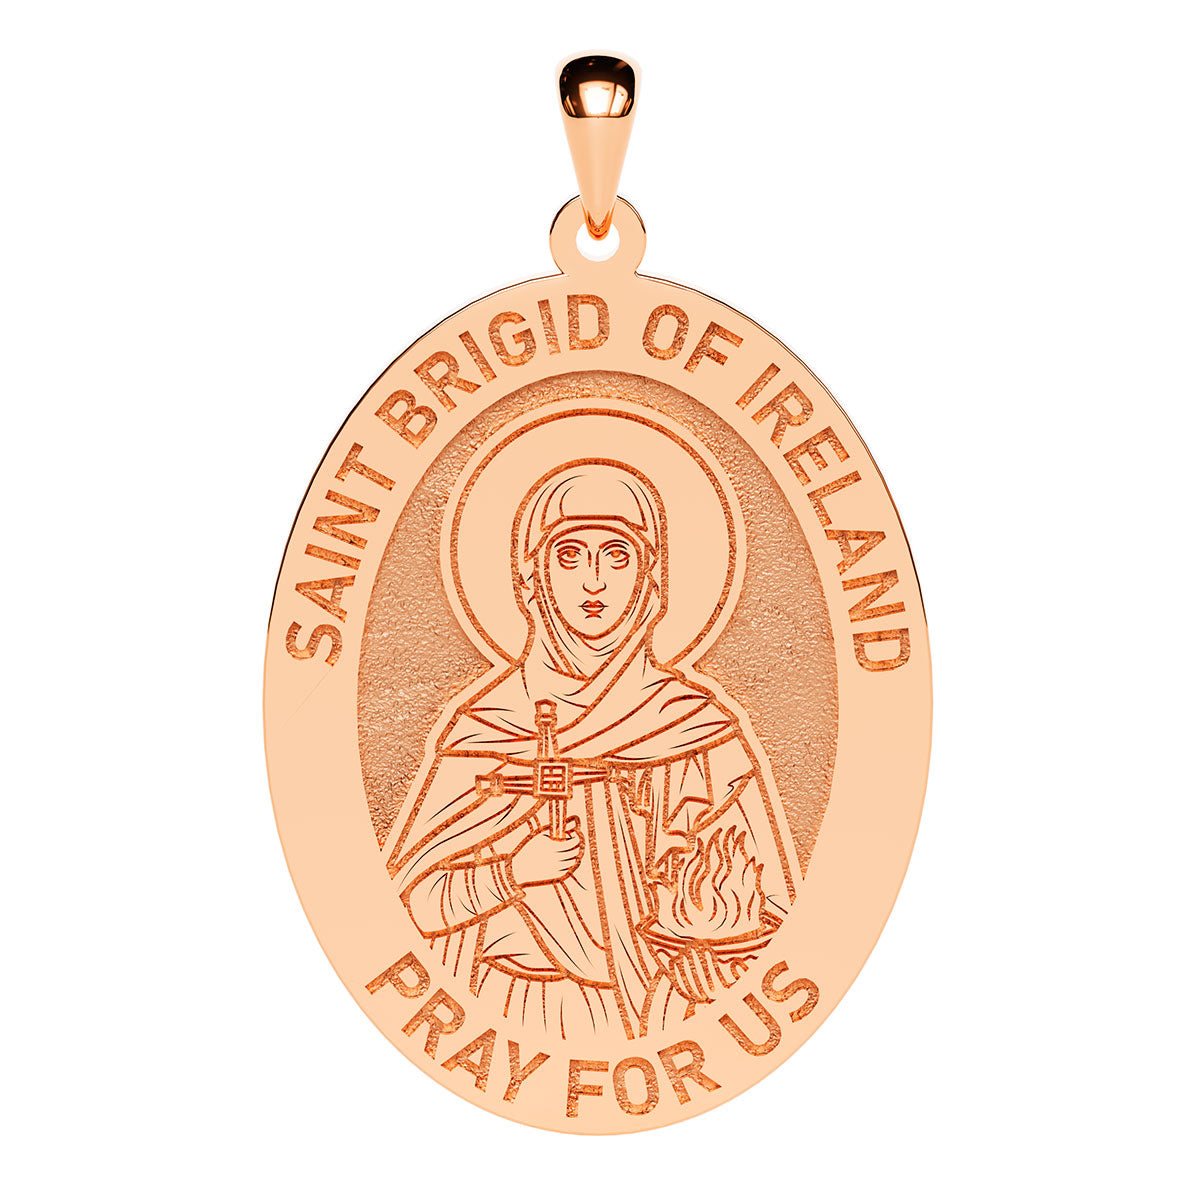 Saint Brigid of Ireland Oval Religious Medal